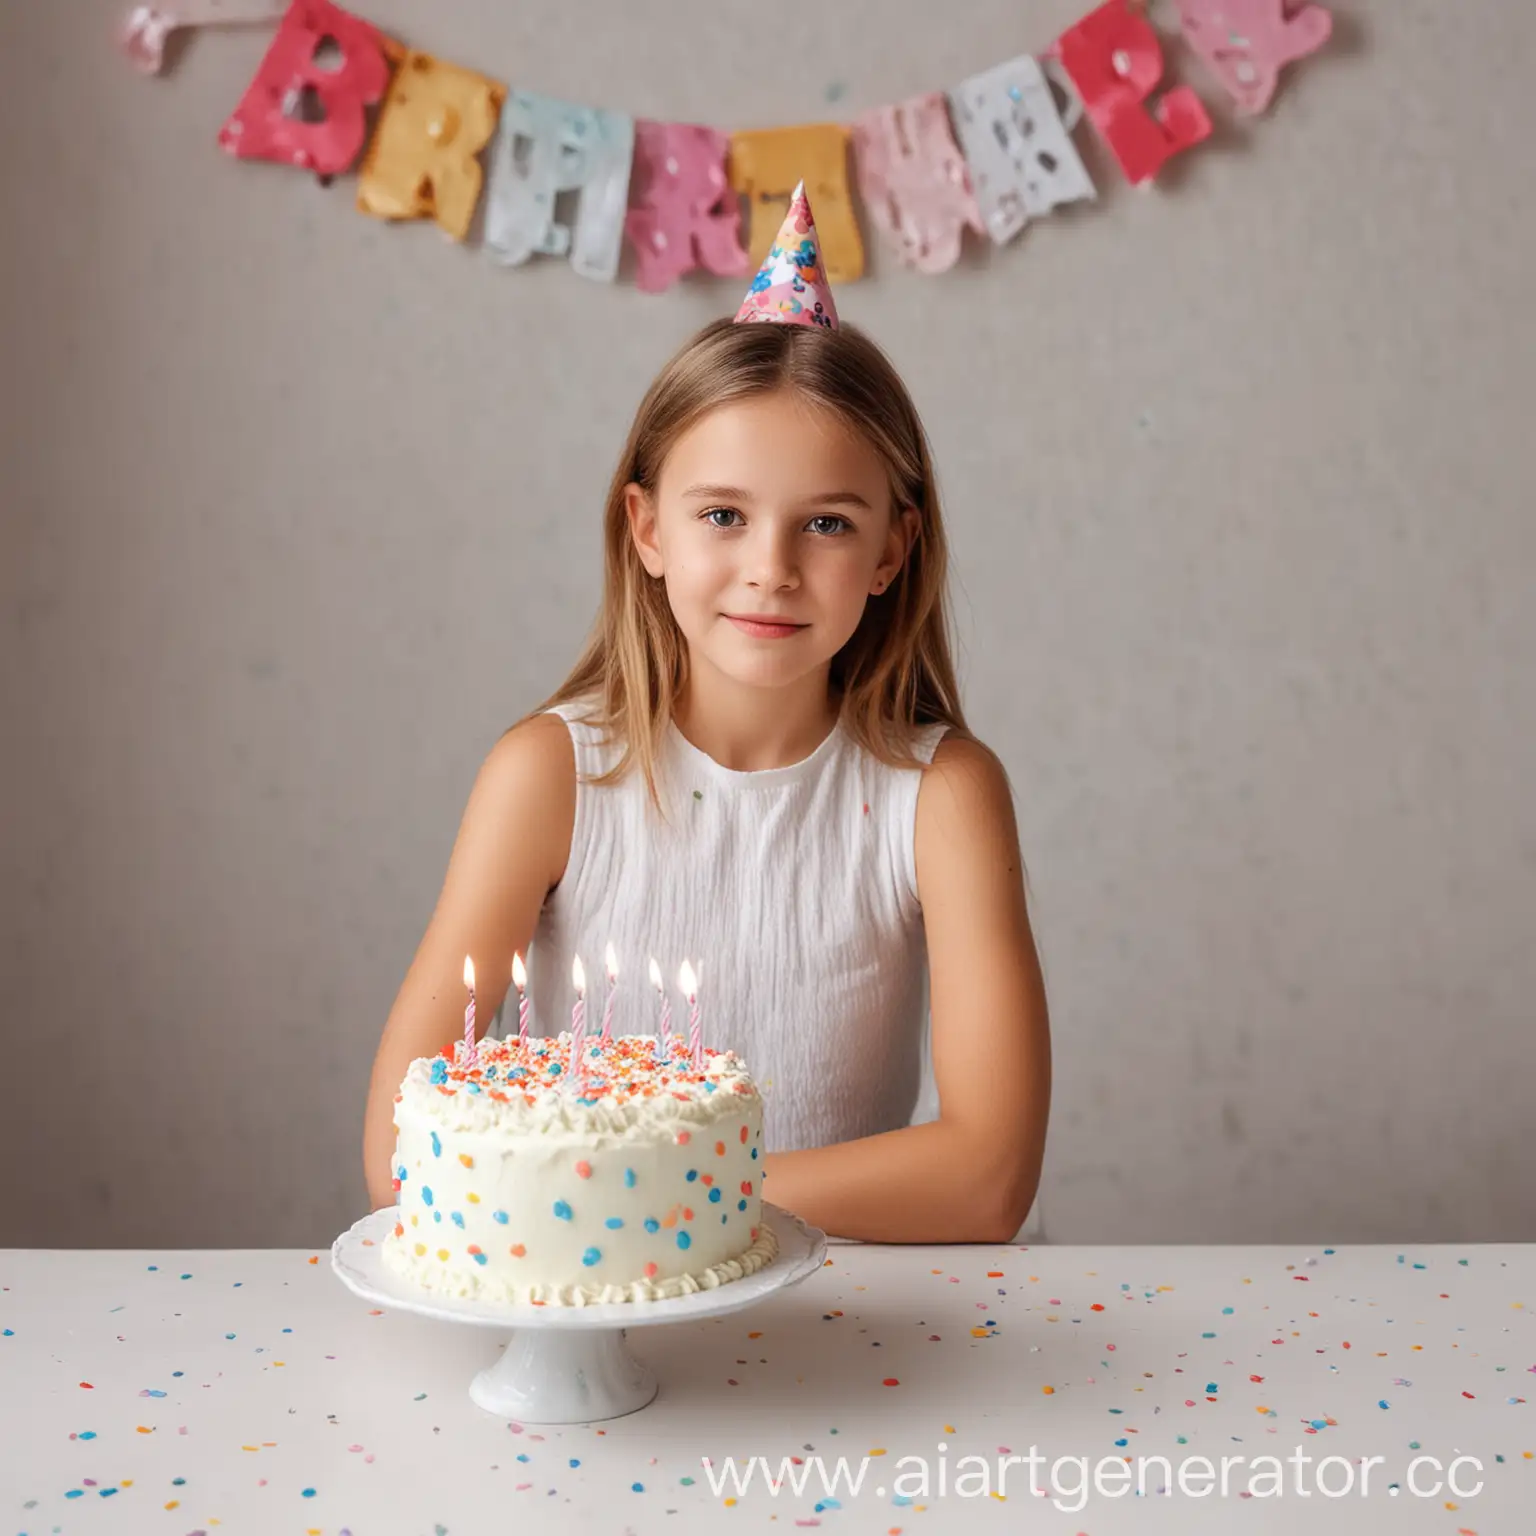 Girl-Celebrating-Birthday-Next-to-Bright-Cake-in-Colorful-Room